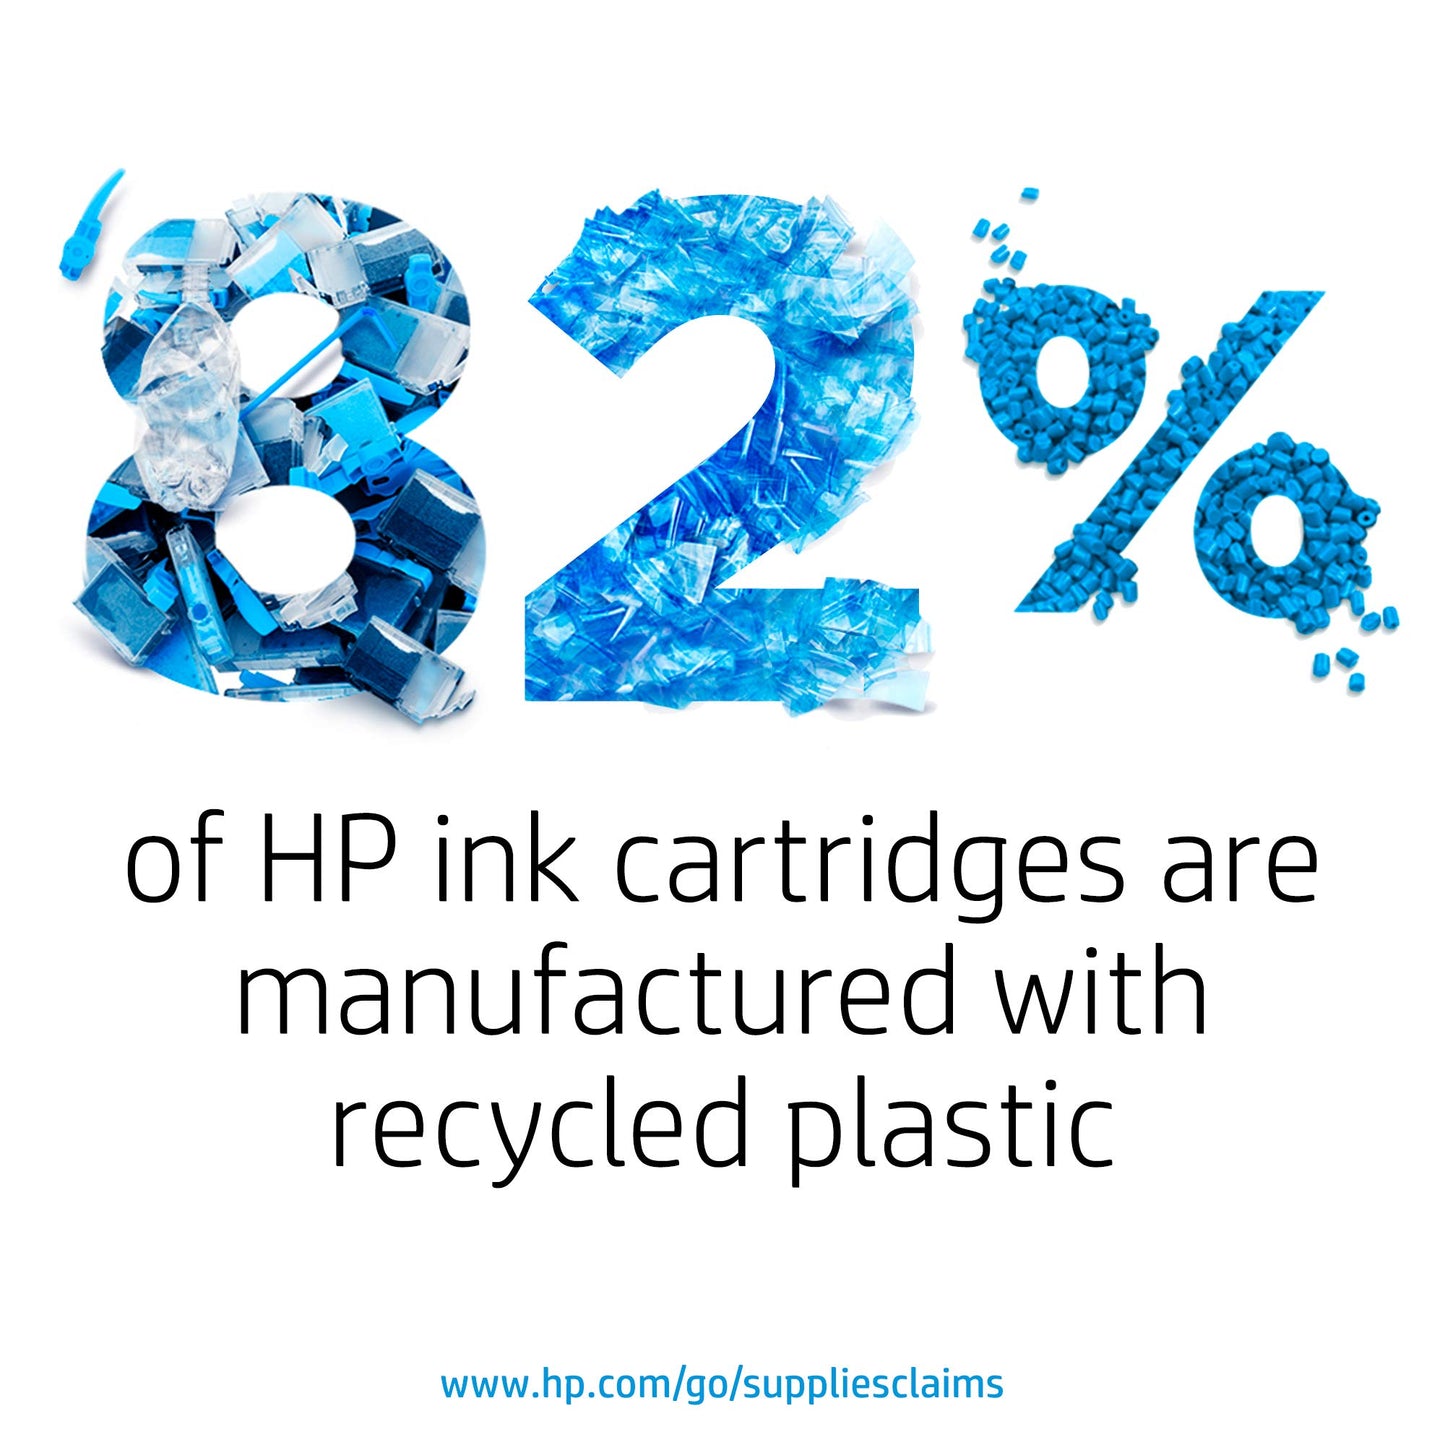 HP 61 | Ink Cartridge | Tri-color | CH562WN